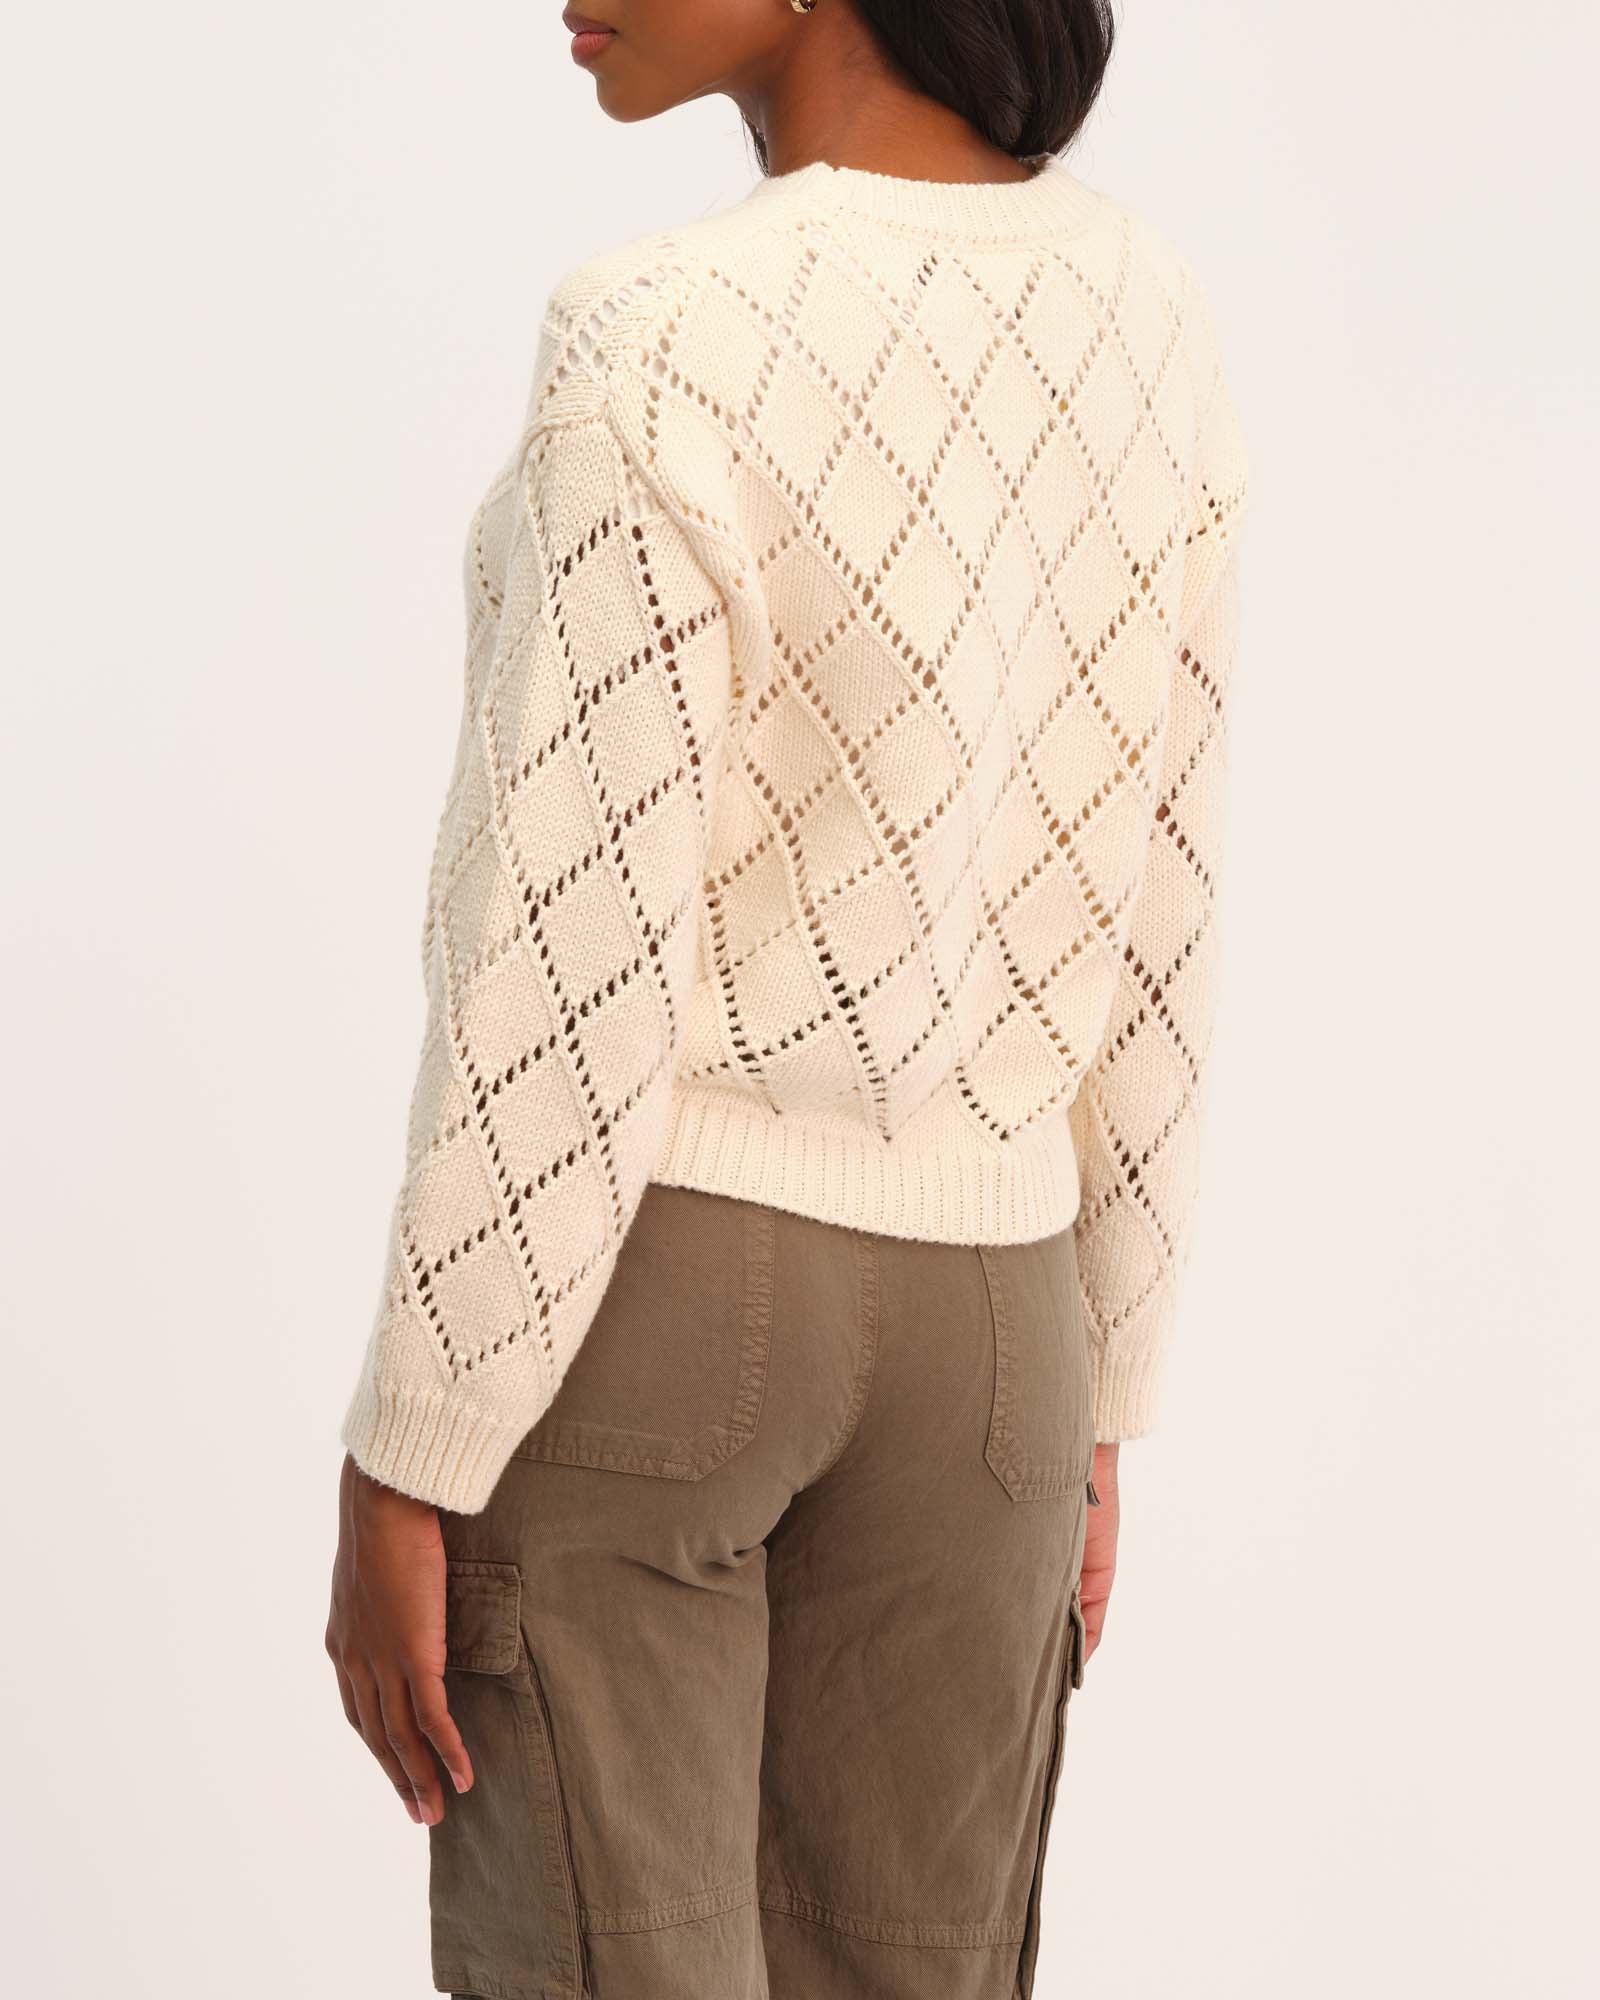 Shop Chelsea & Theodore Women's Novelty Stitch Crewneck Sweater | JANE + MERCER